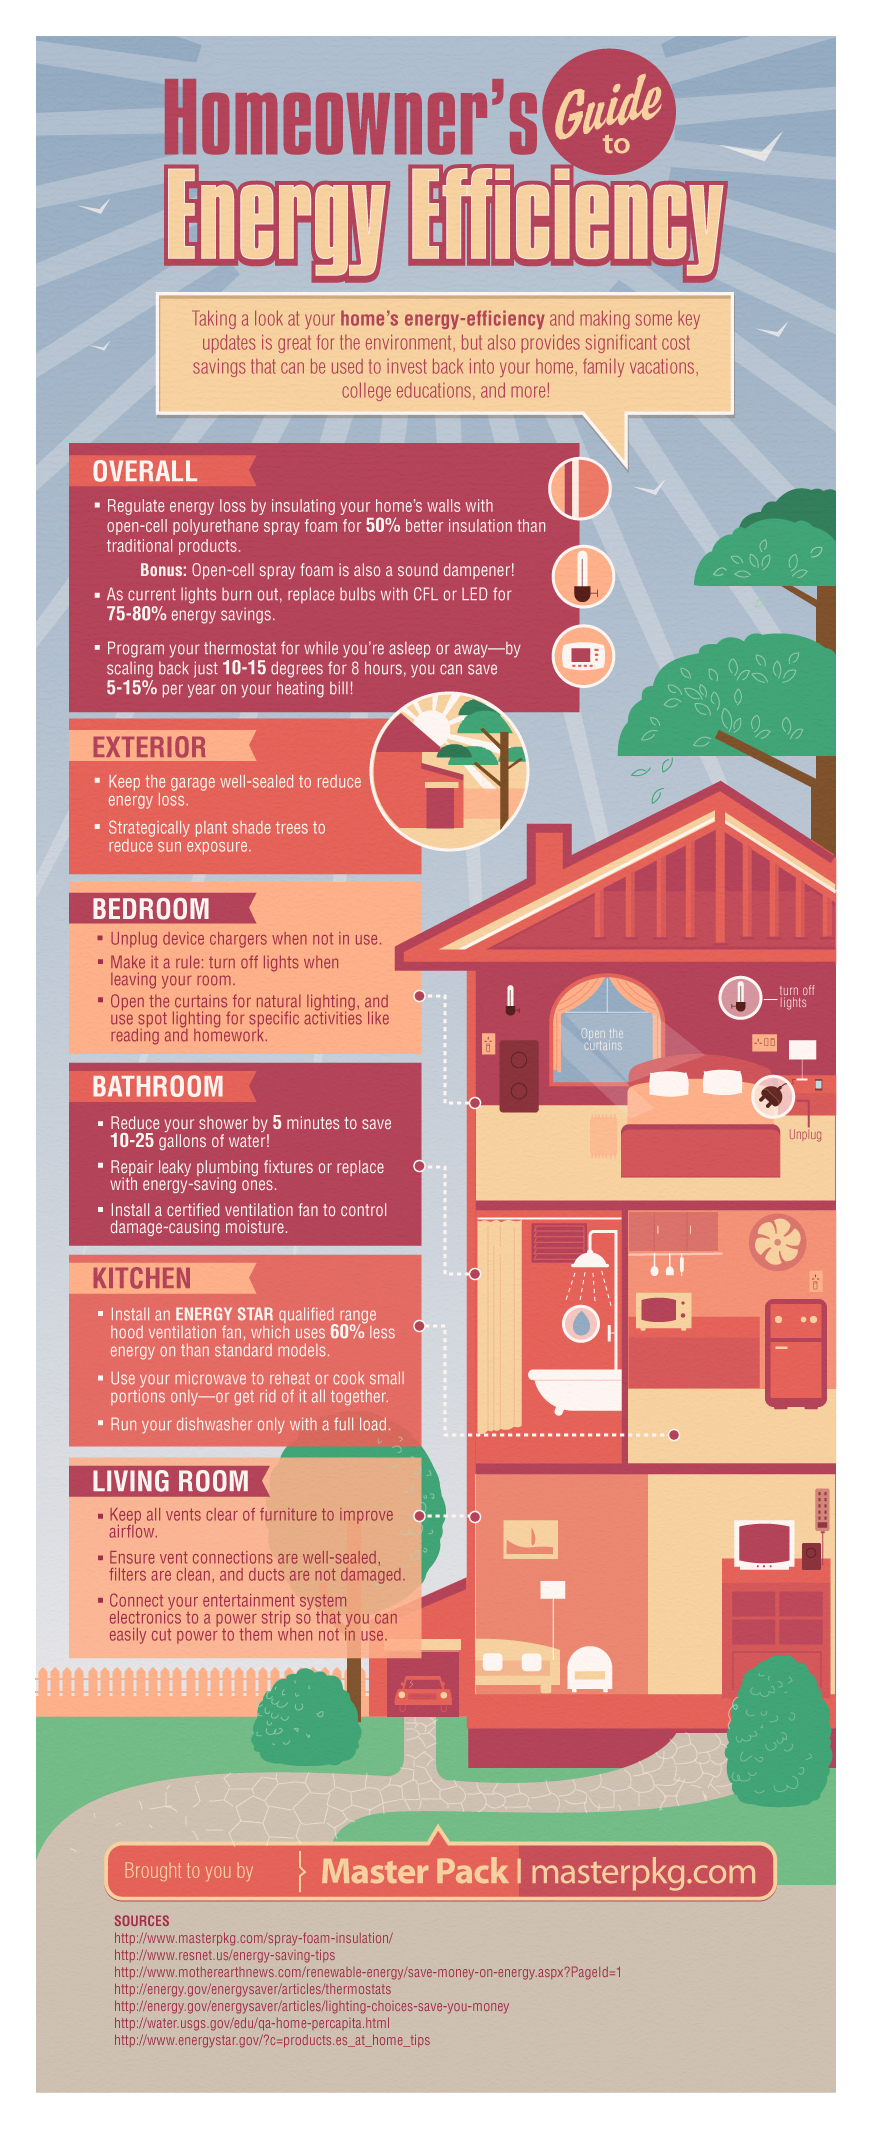 Homeowner's Guide to Energy Efficiency